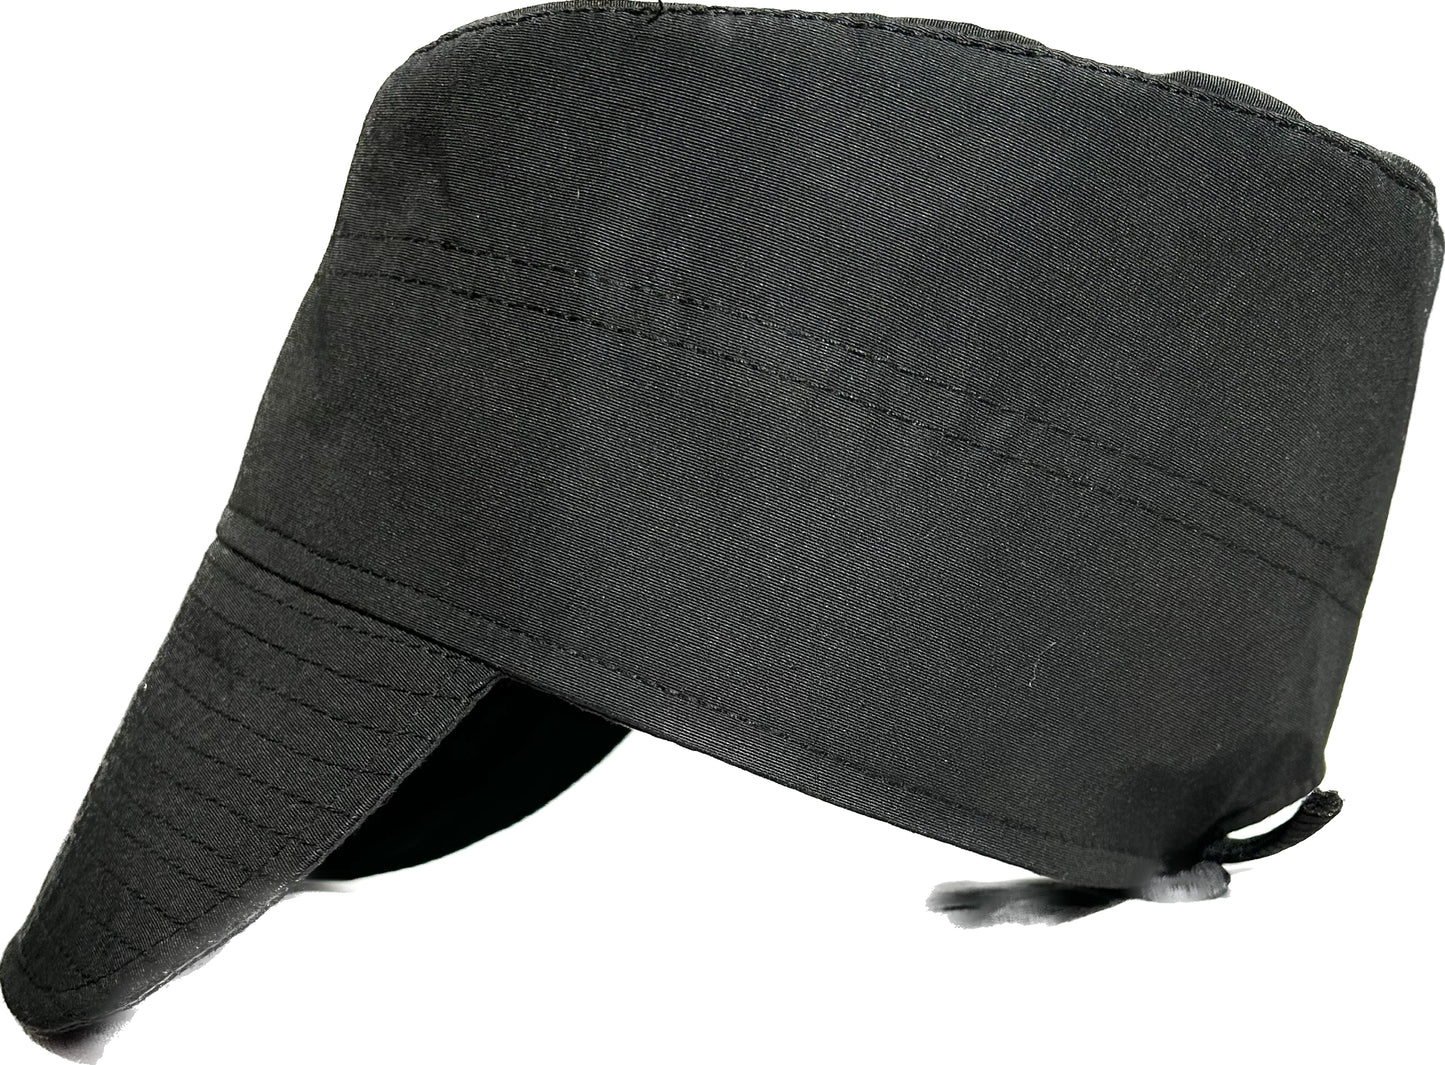 The Rocky cap